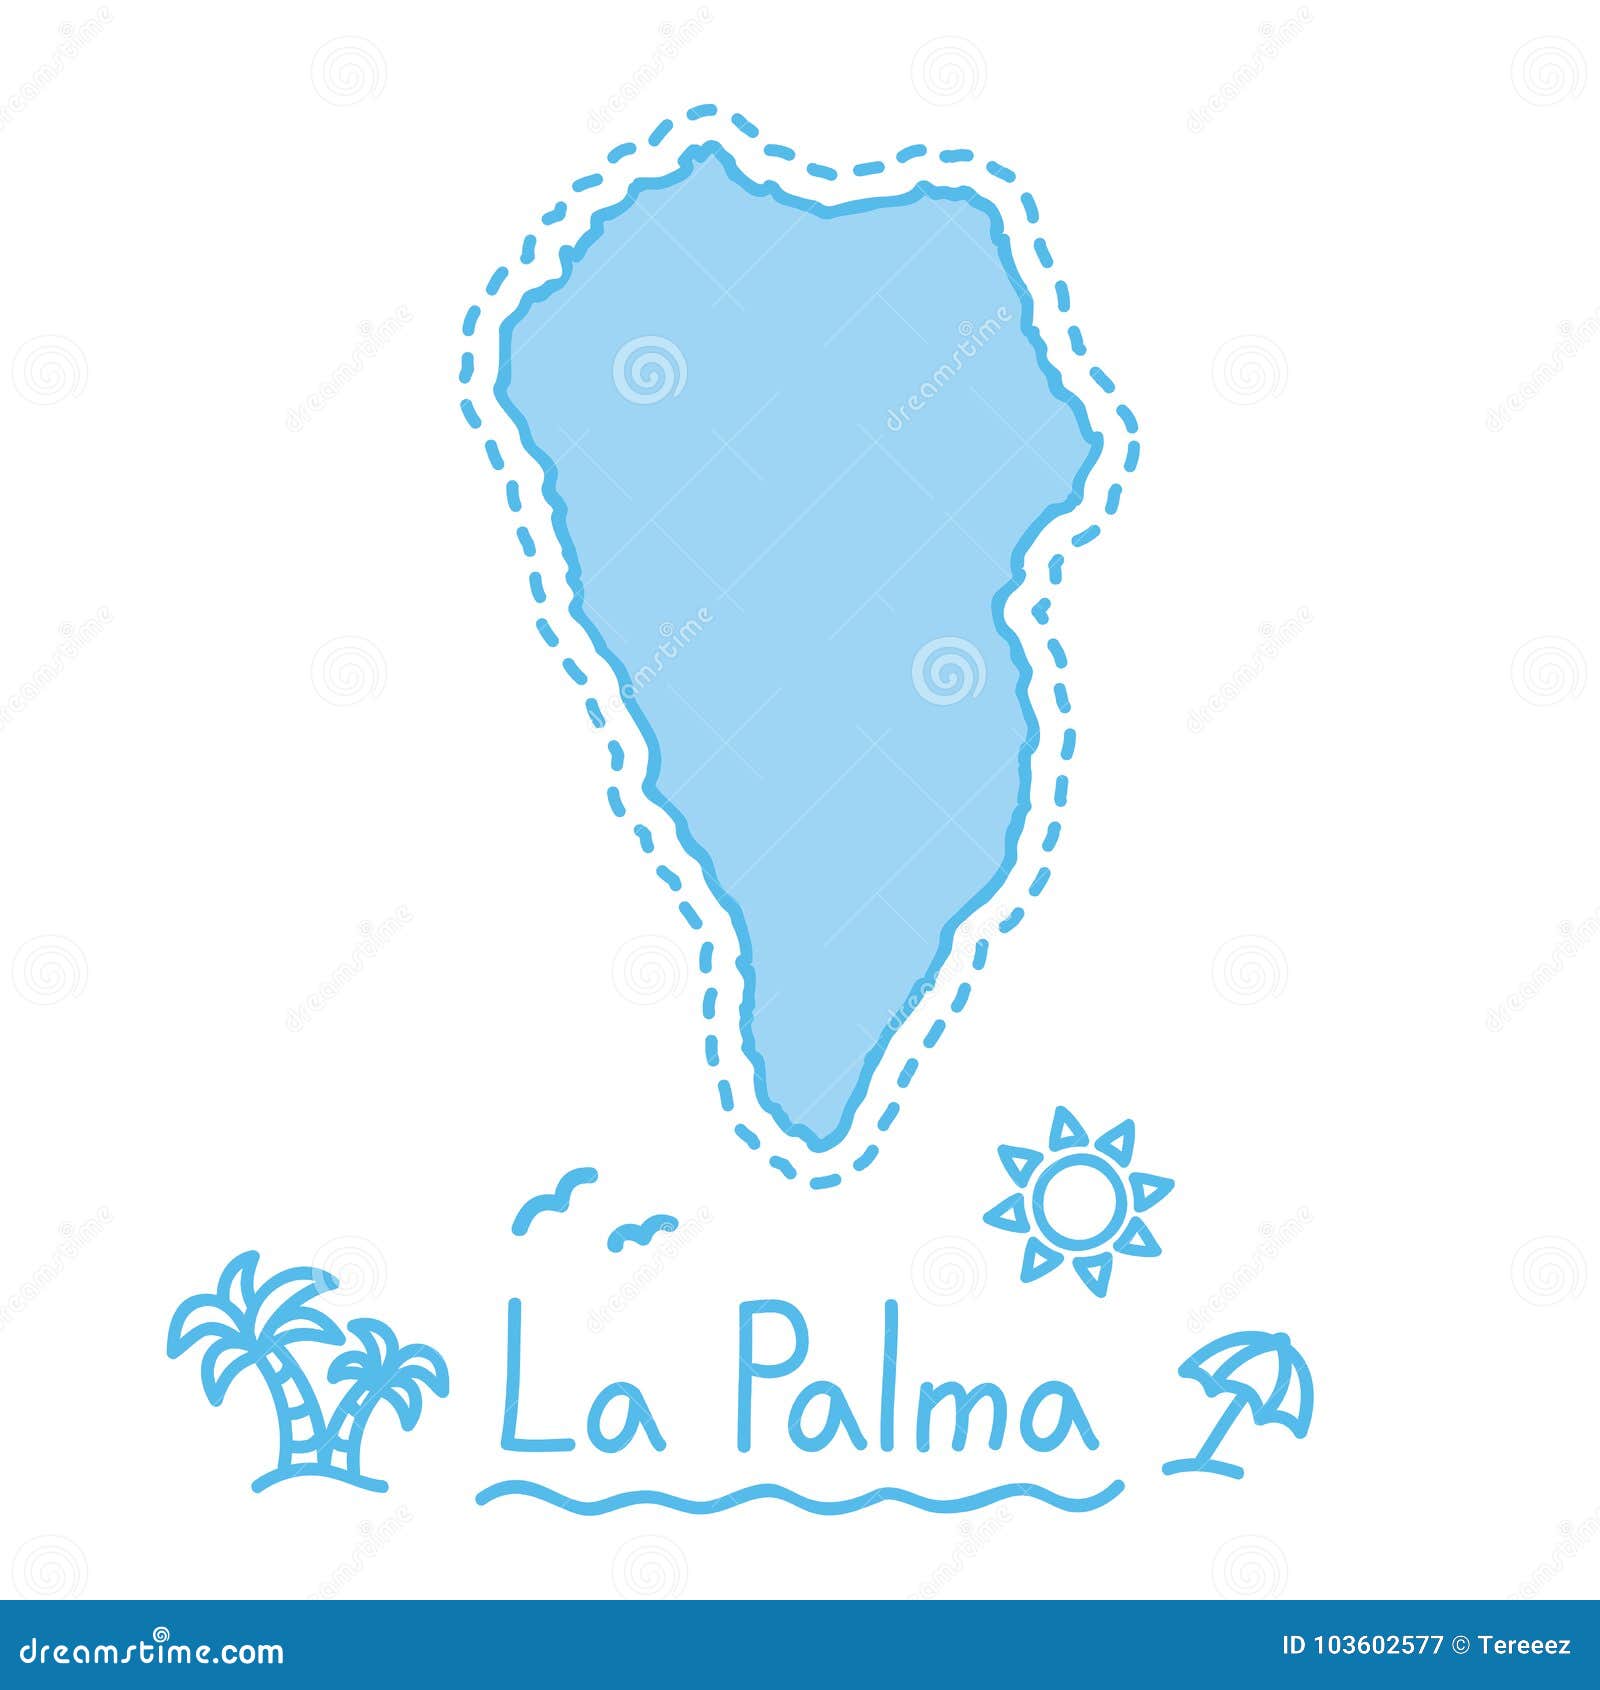 la palma island map  cartography concept canary islands